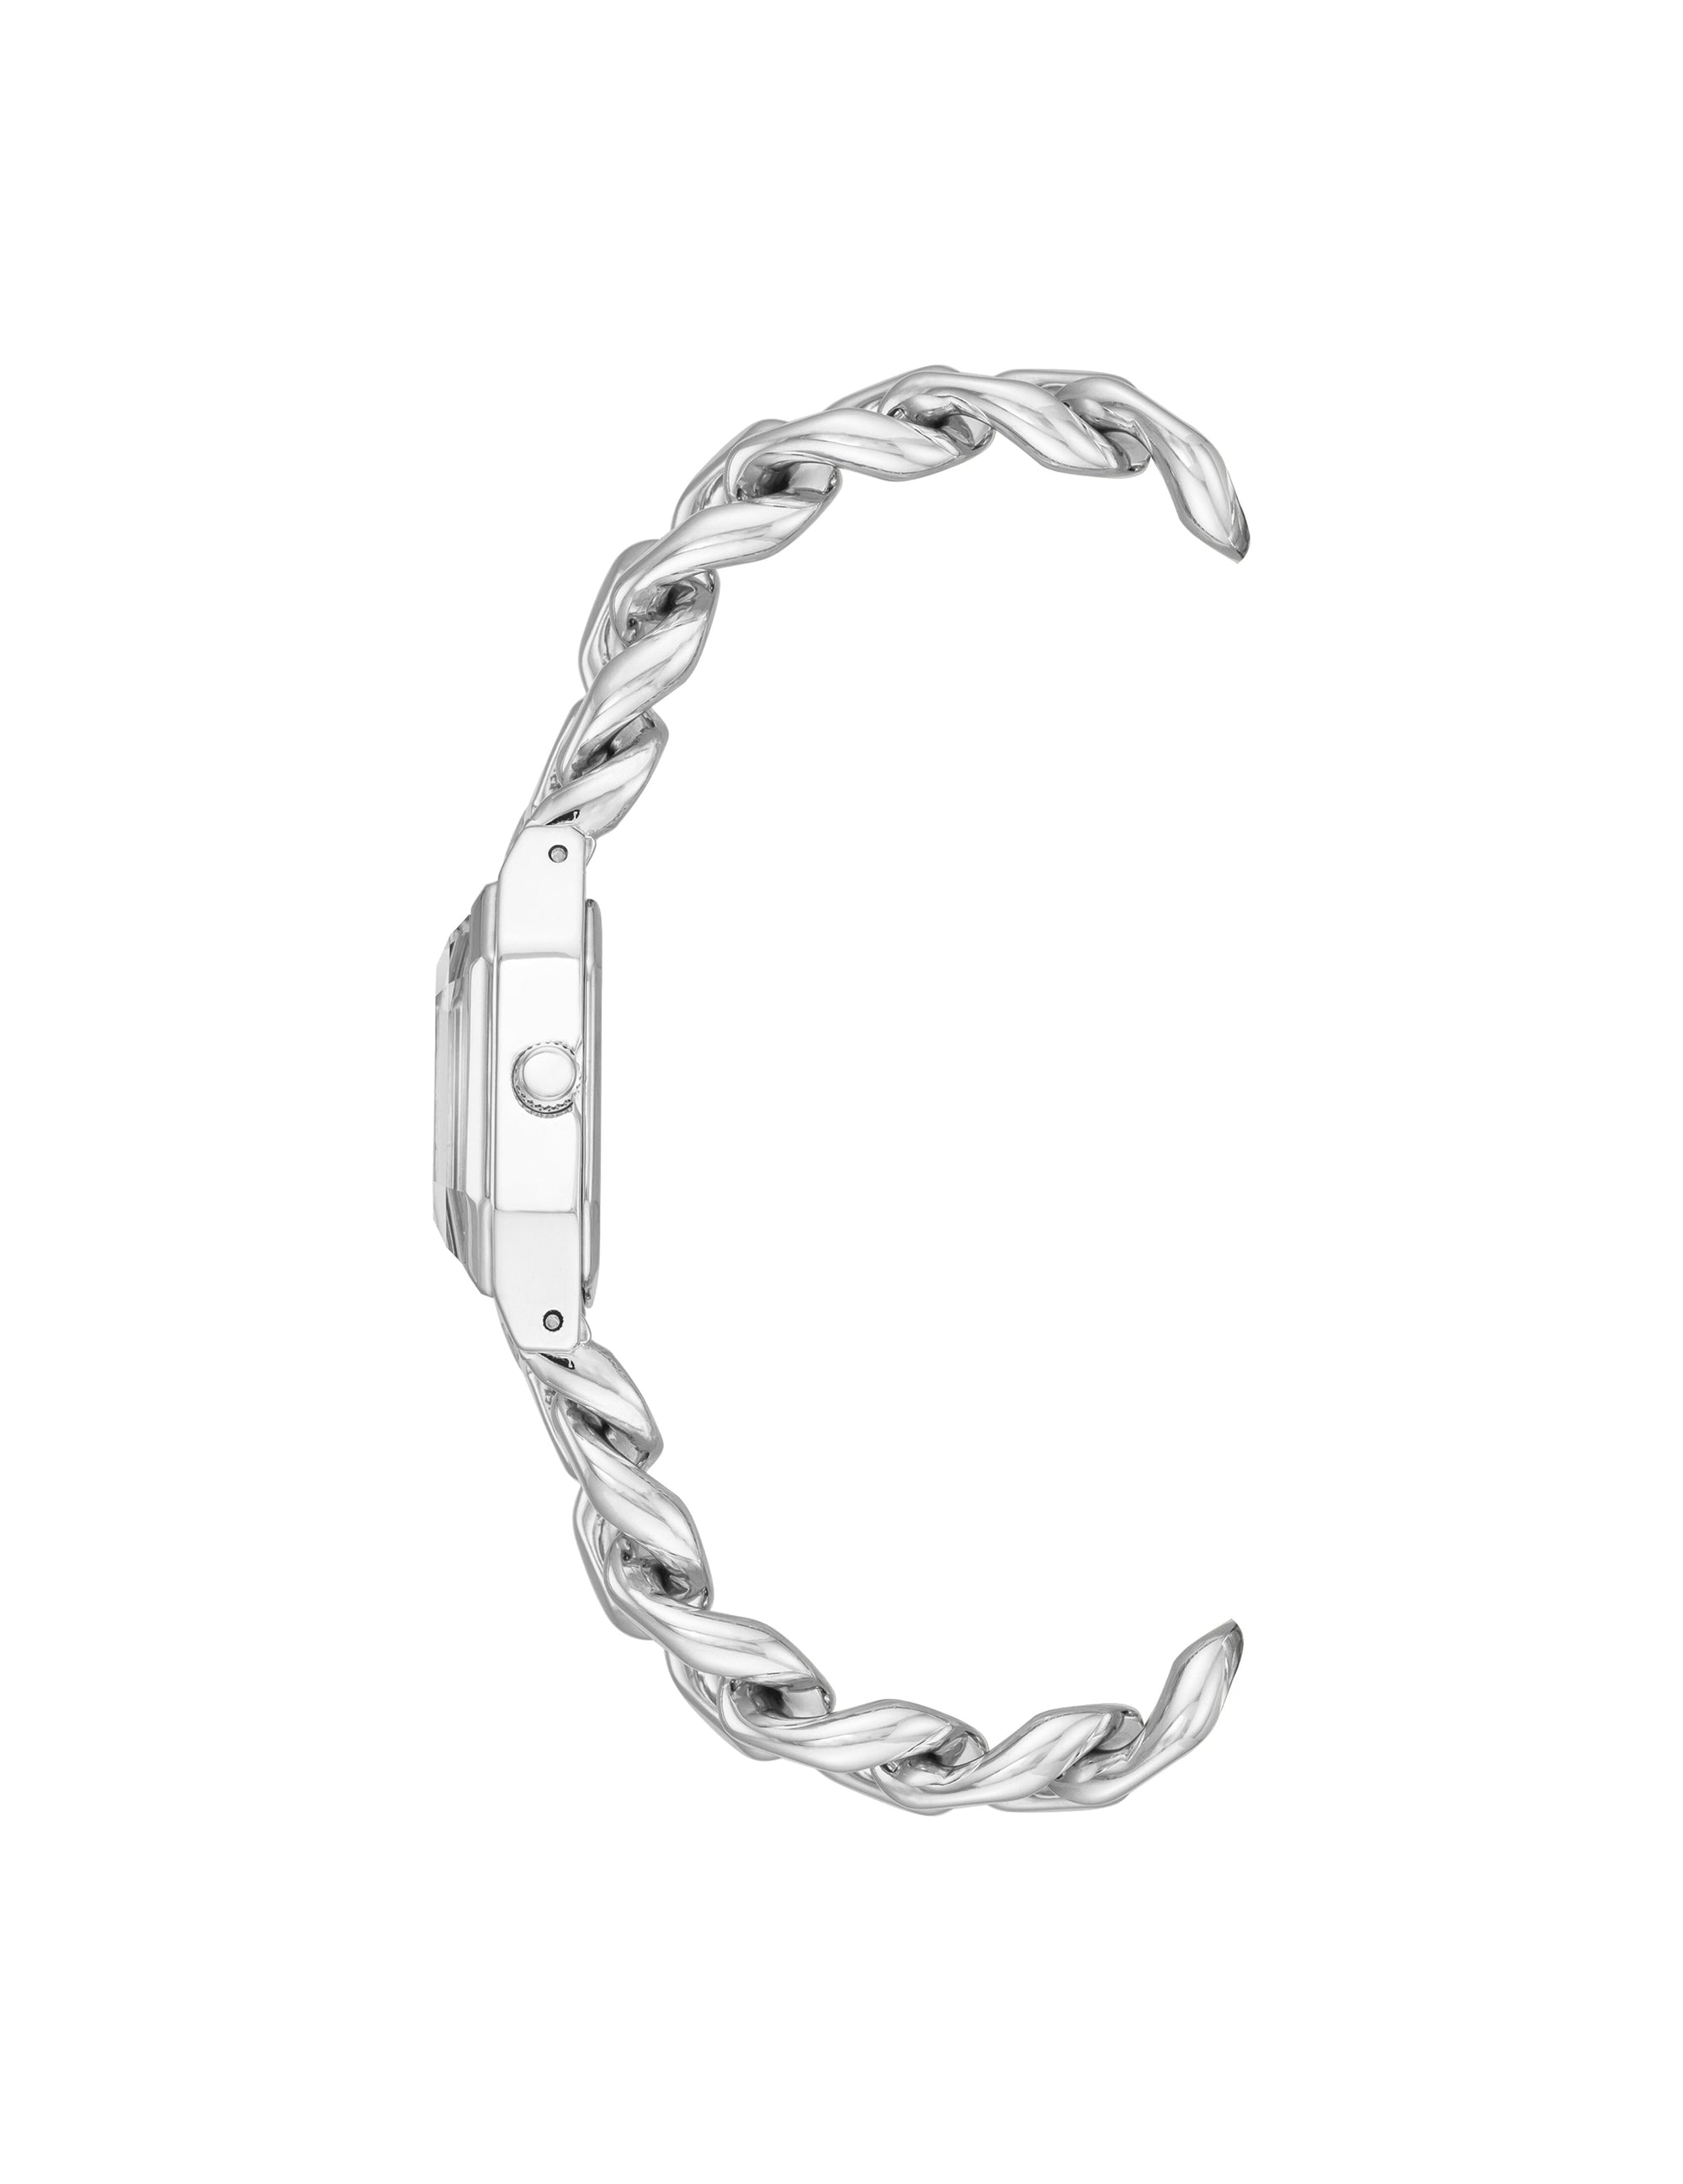 Anne Klein Silver-Tone Octagonal Crystal Accented Chain Bracelet Watch